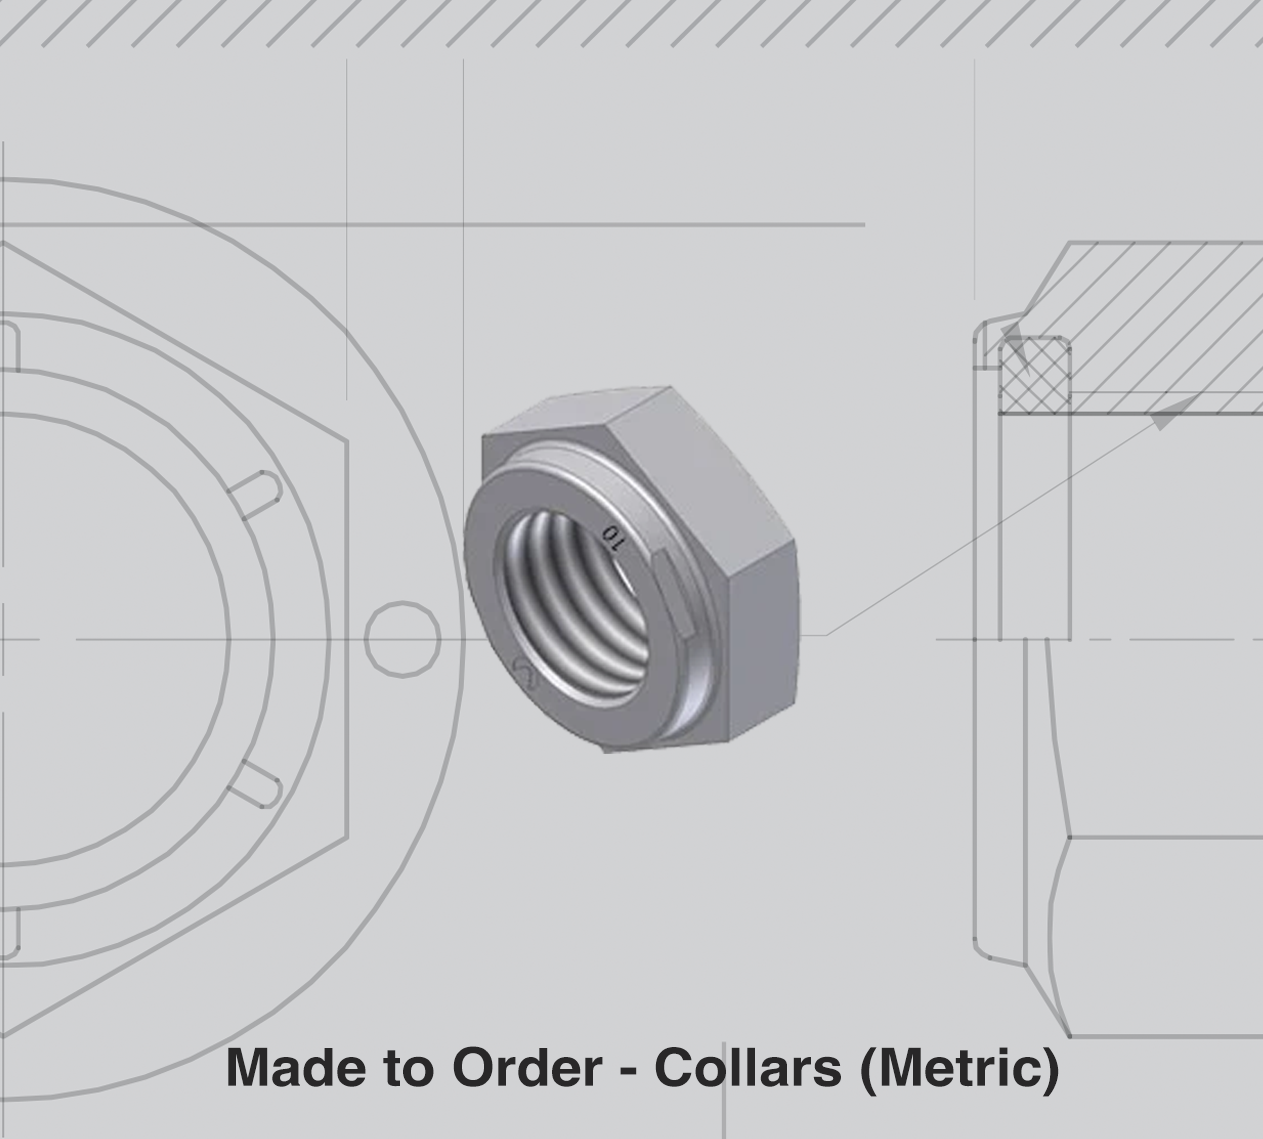 Made to Order - Collars (Metric)